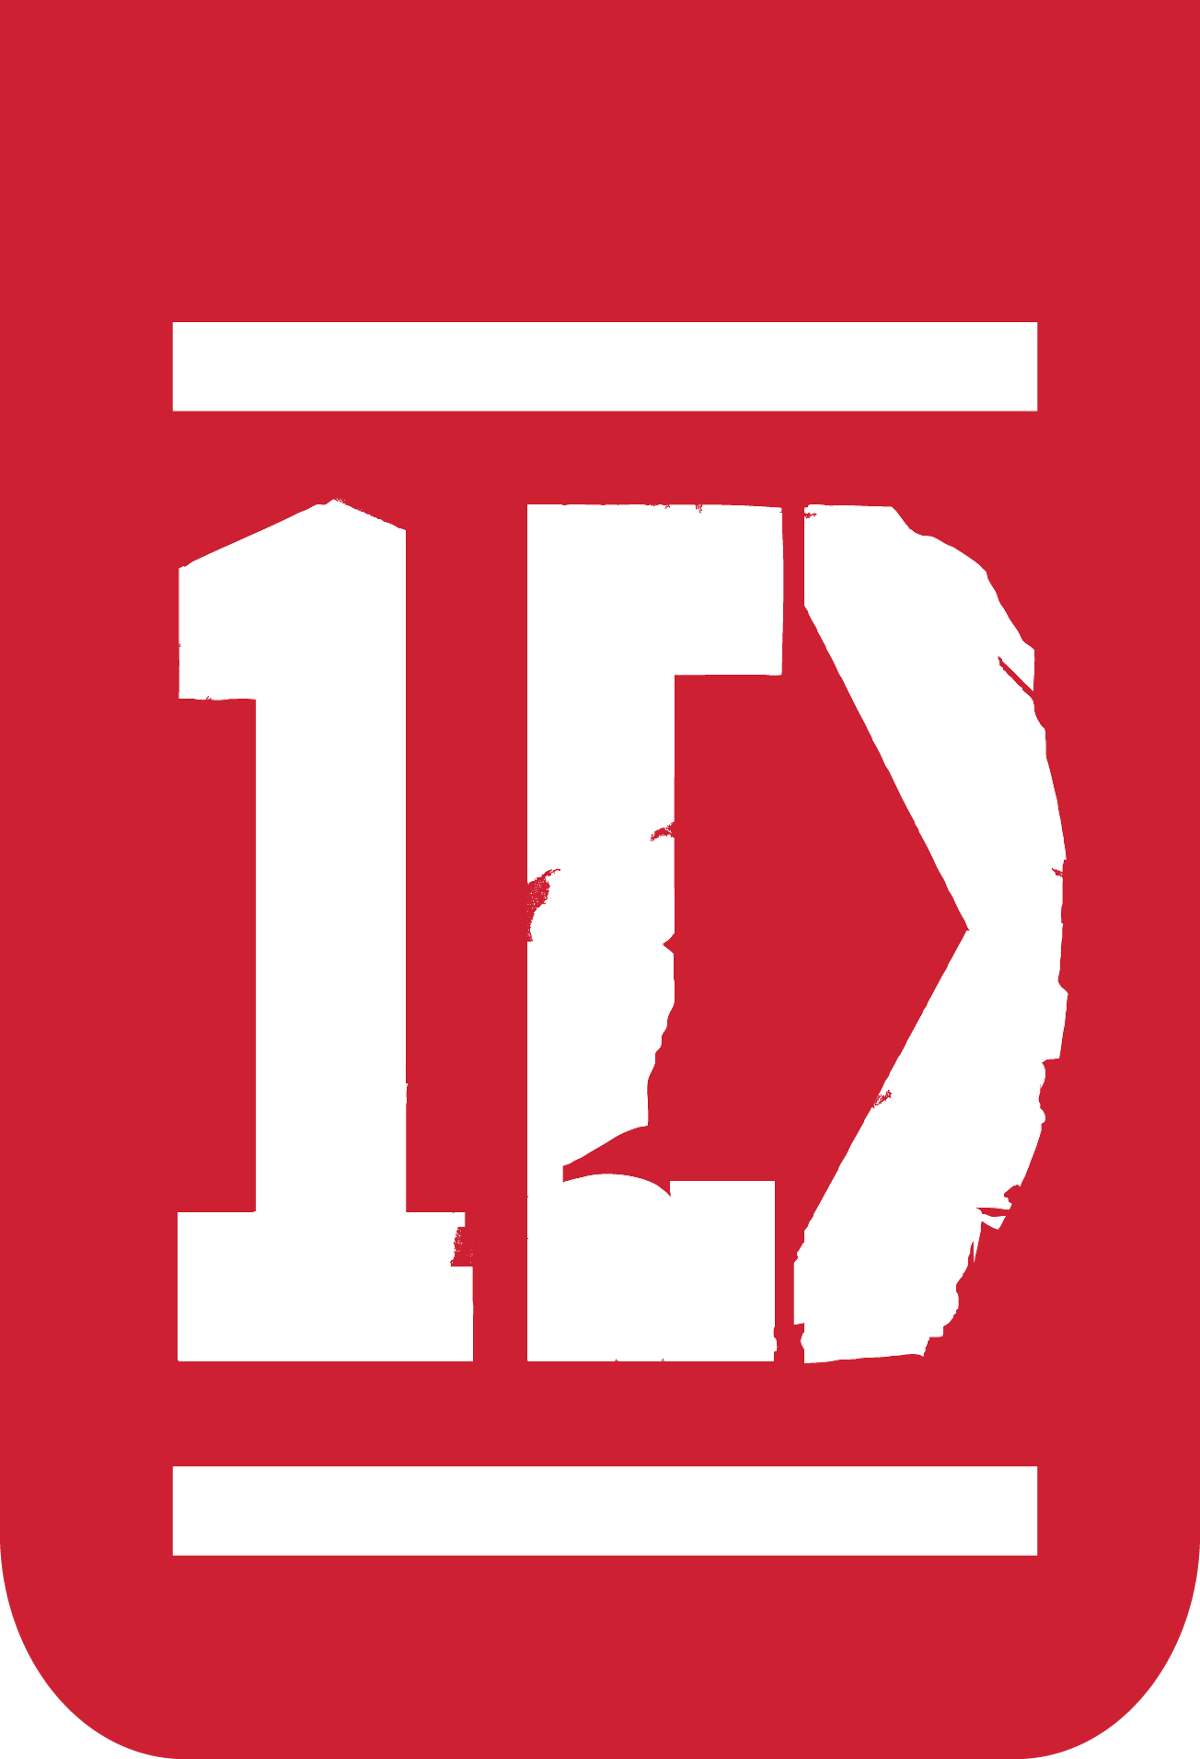 Original Red Logo - Image - One-Direction-Red-Logo.png | One Direction Wiki | FANDOM ...